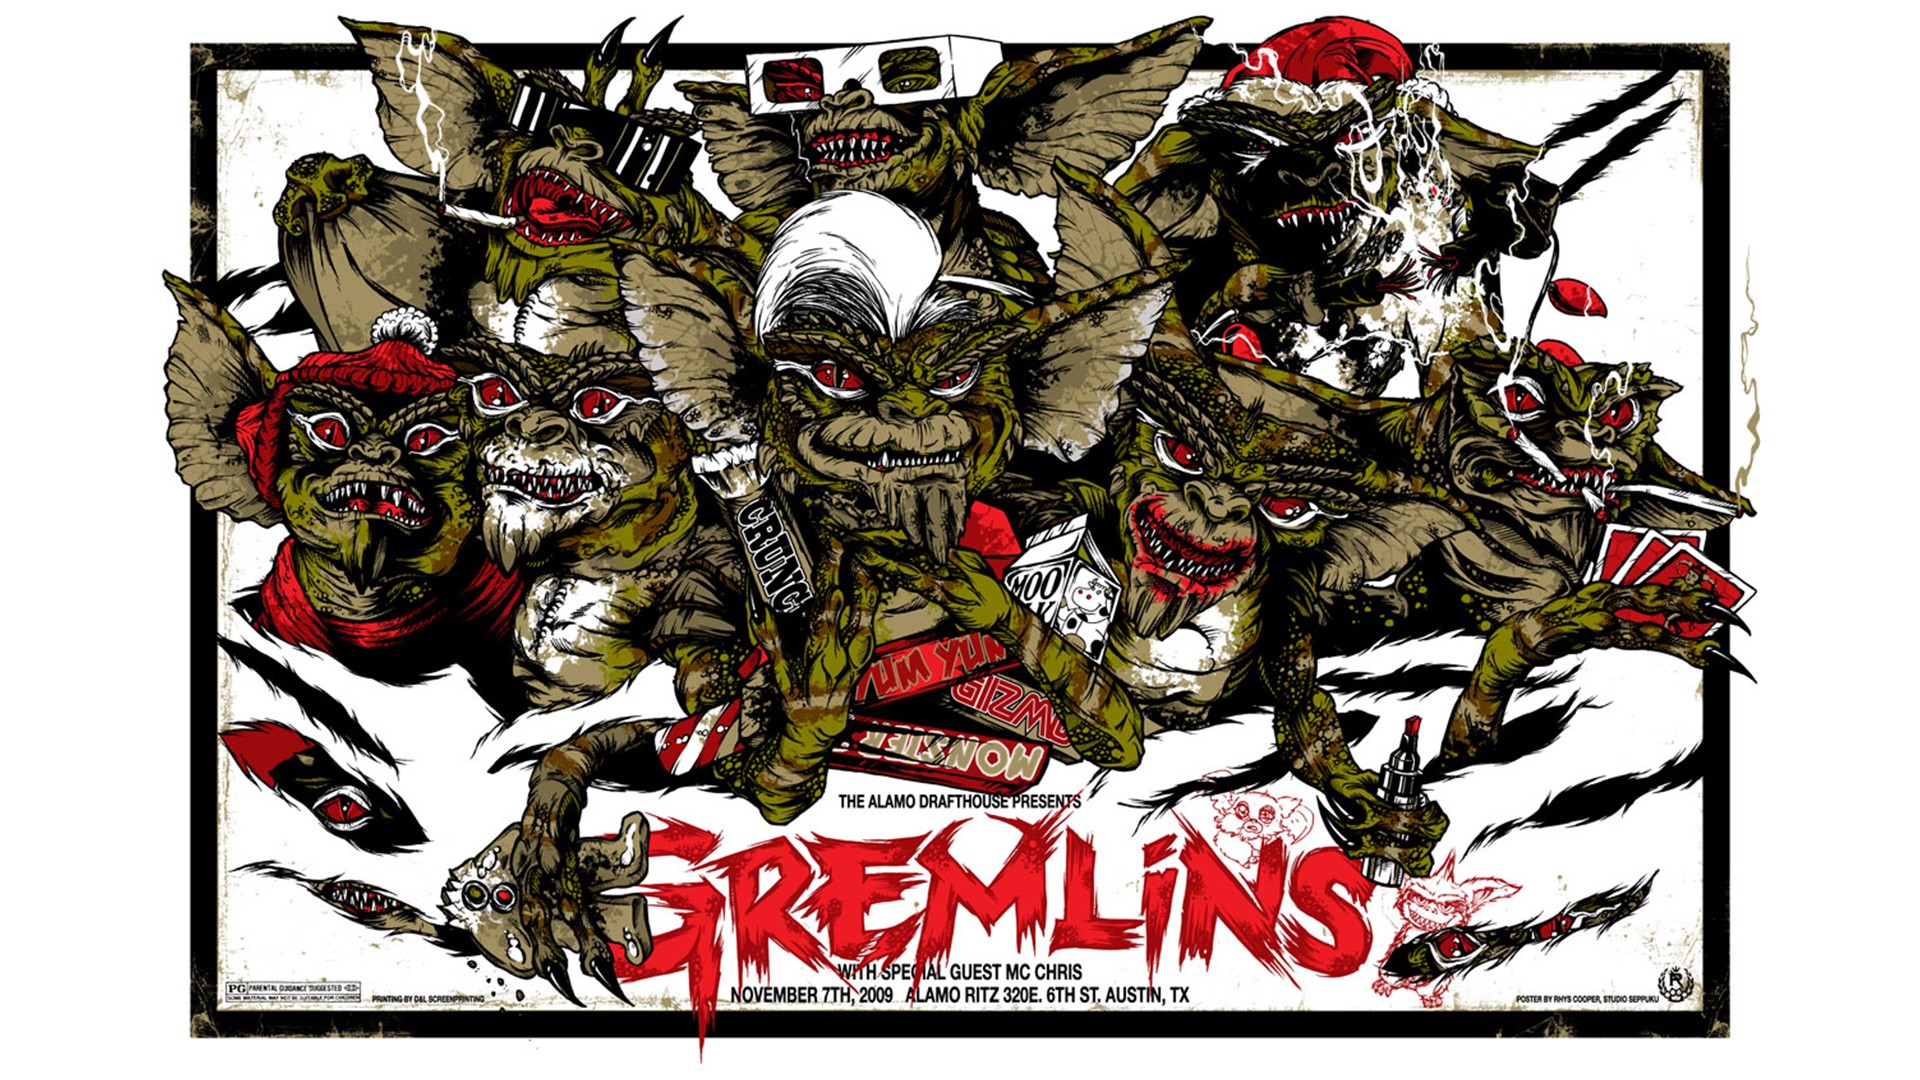 Gremlins - 4K movie database - FlatpanelsHD